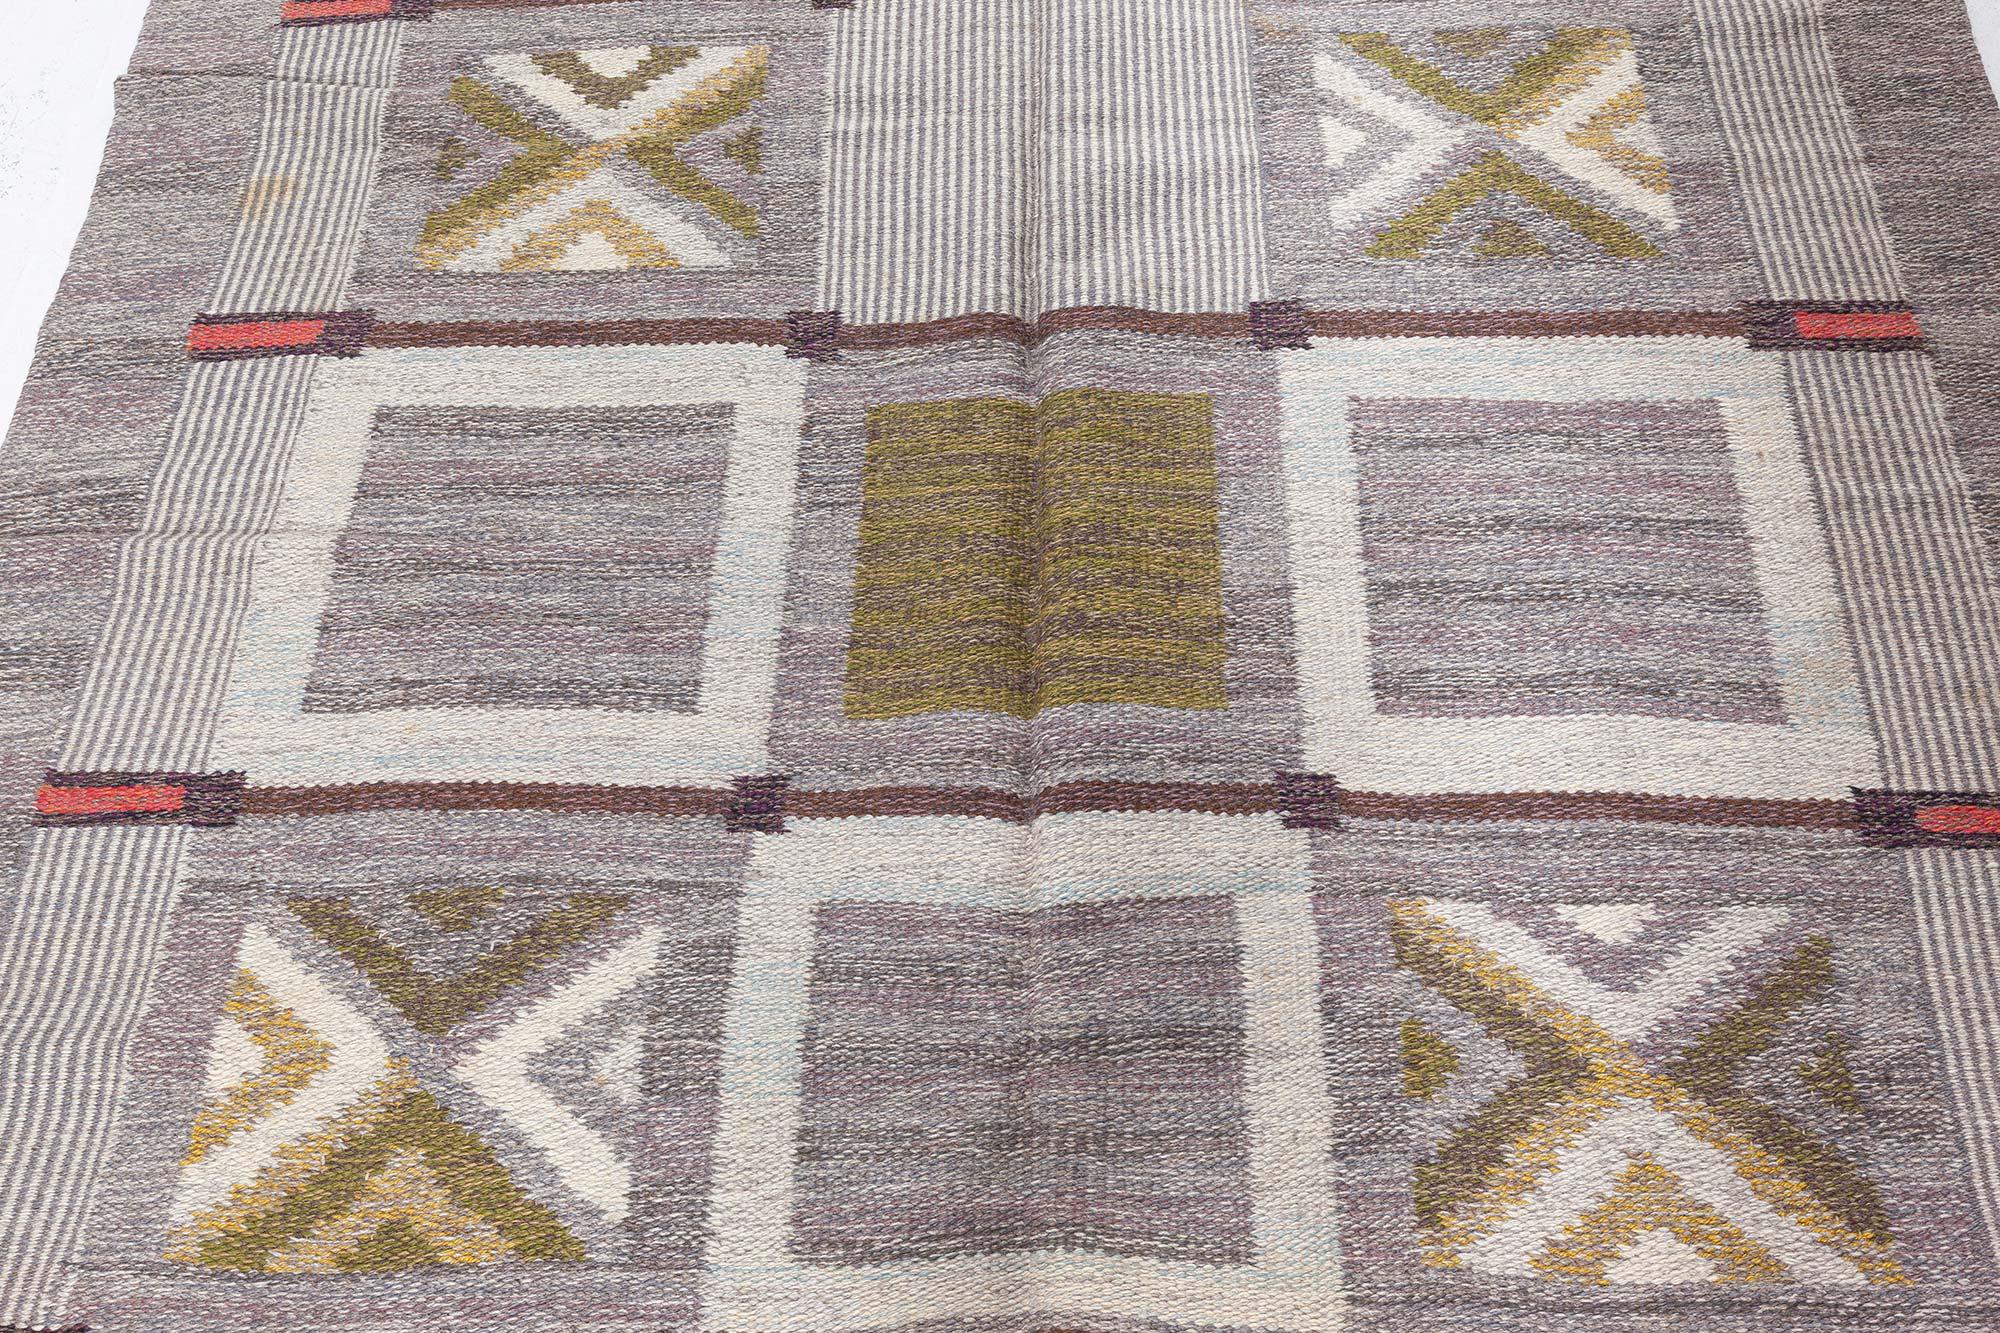 Mid-20th century Swedish geometric brown, gray, green flat-weave wool rug
Size: 4'9